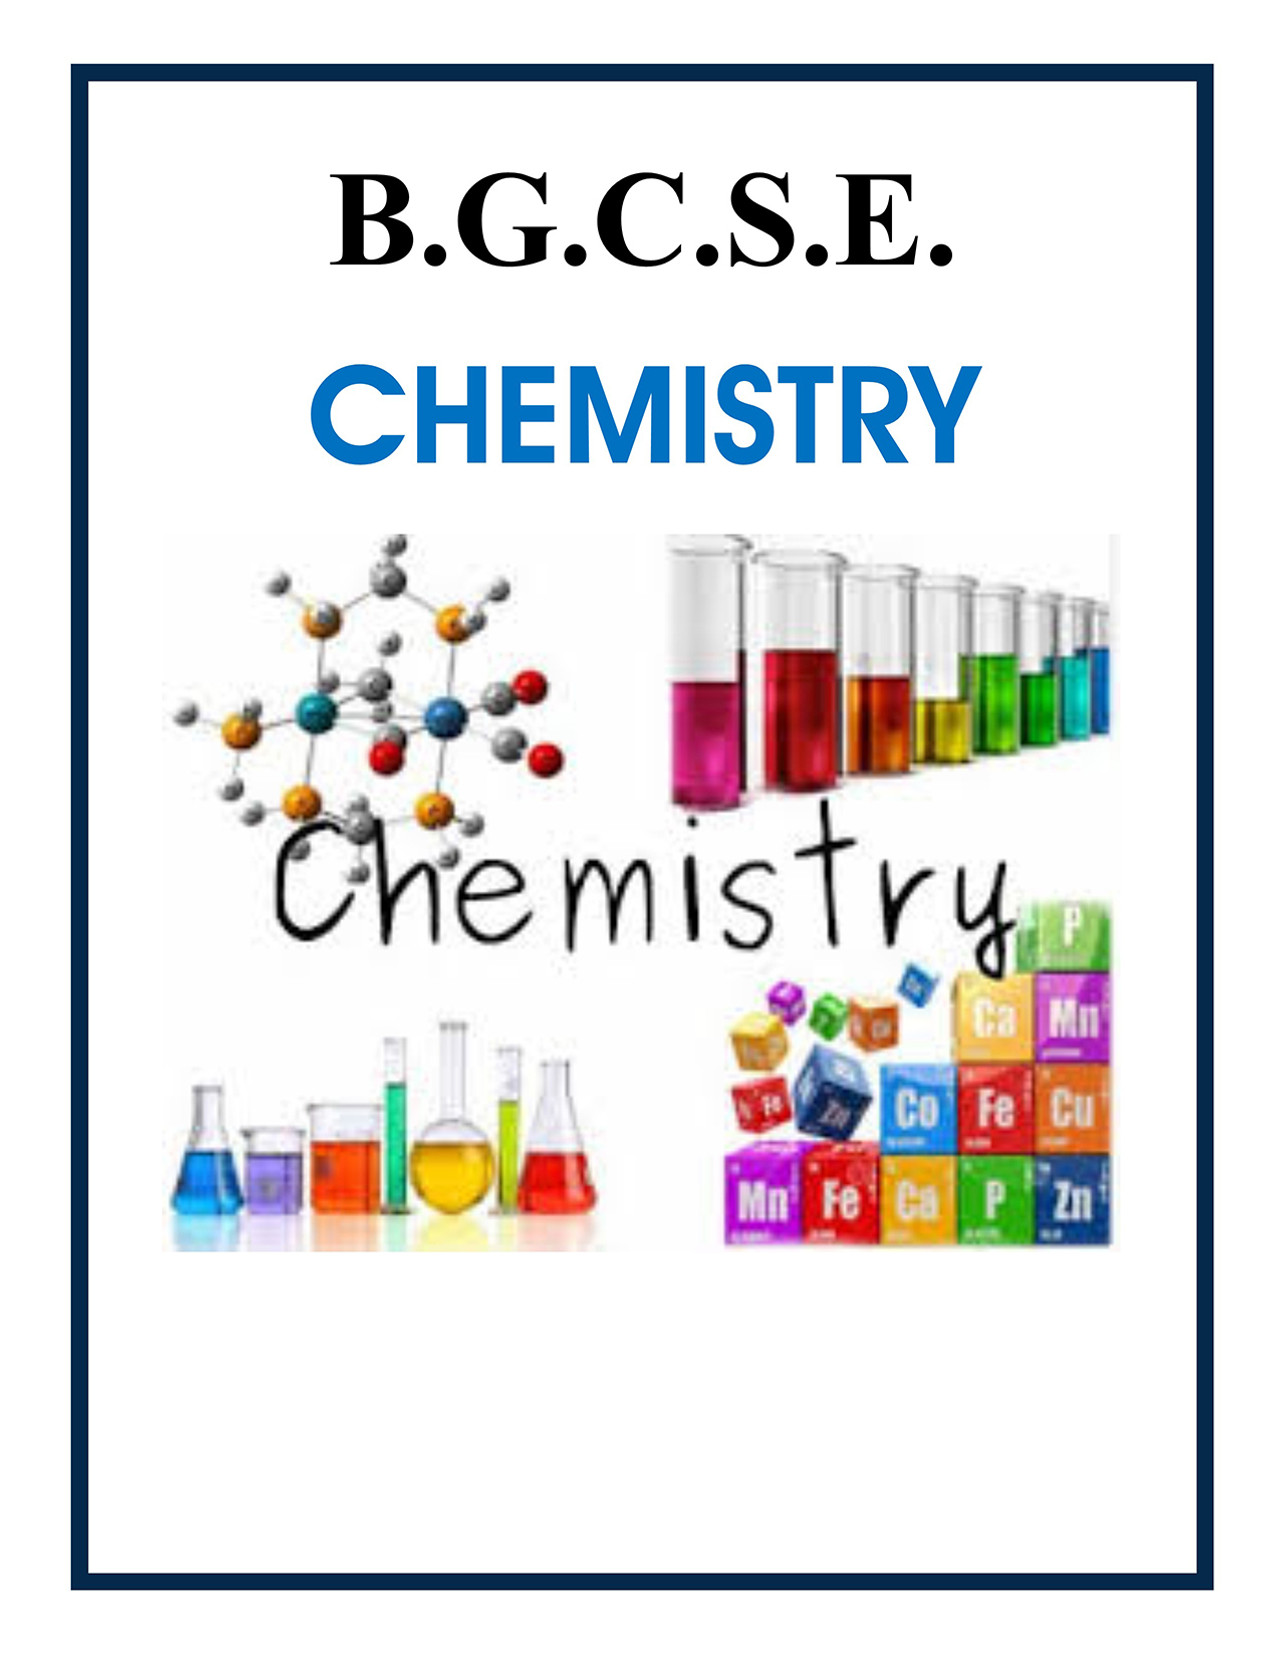 bgcse chemistry coursework